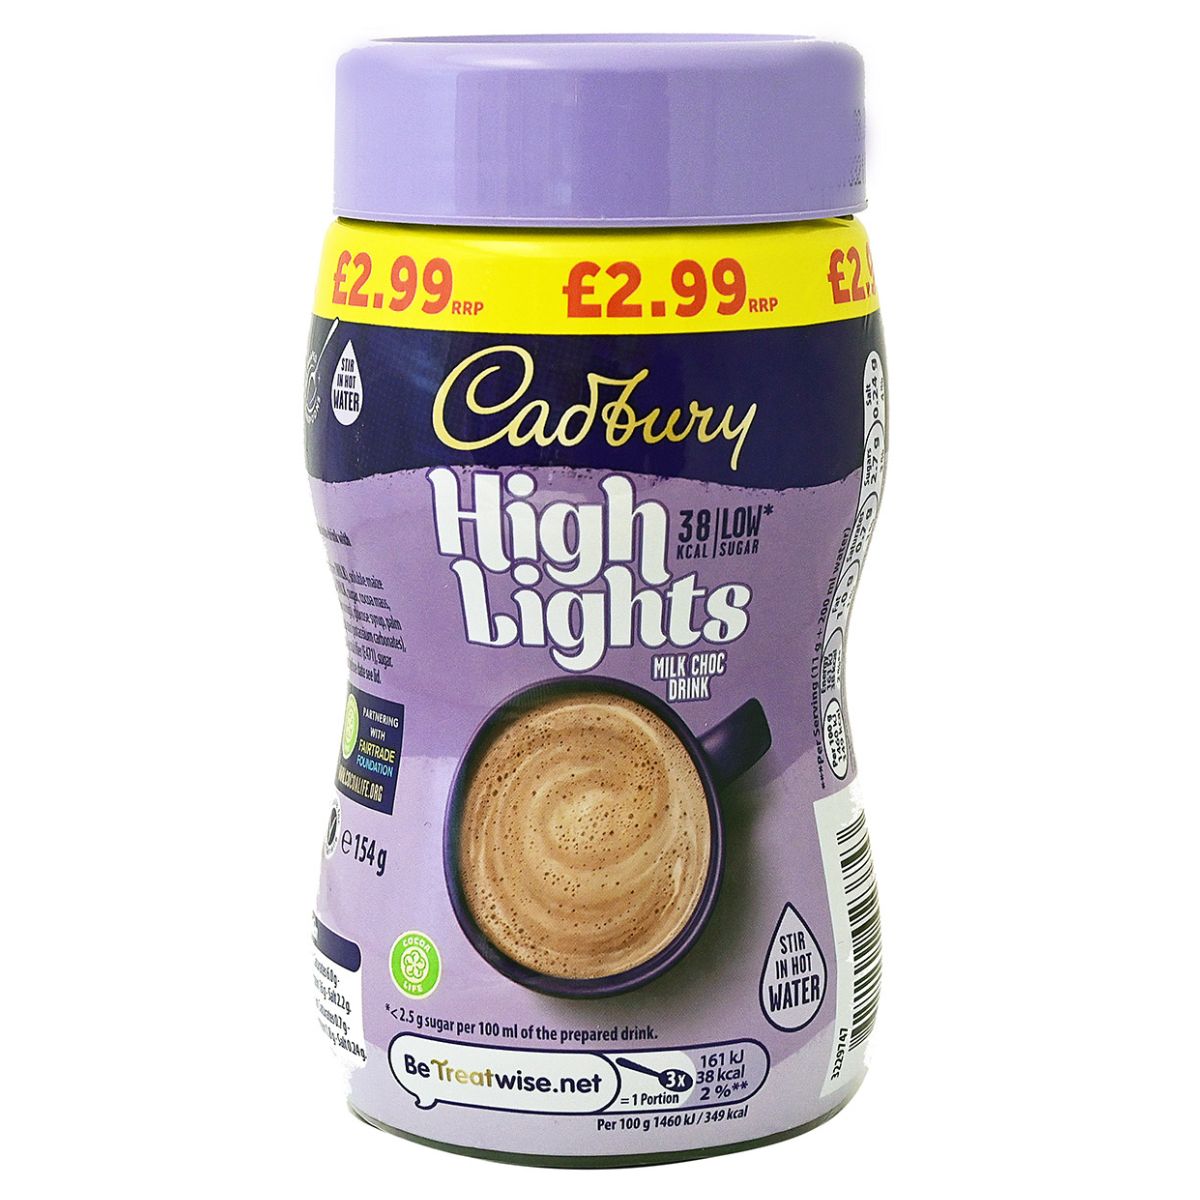 Cadbury - Night Light Milk Choc Drink - 154g high lights hot chocolate.